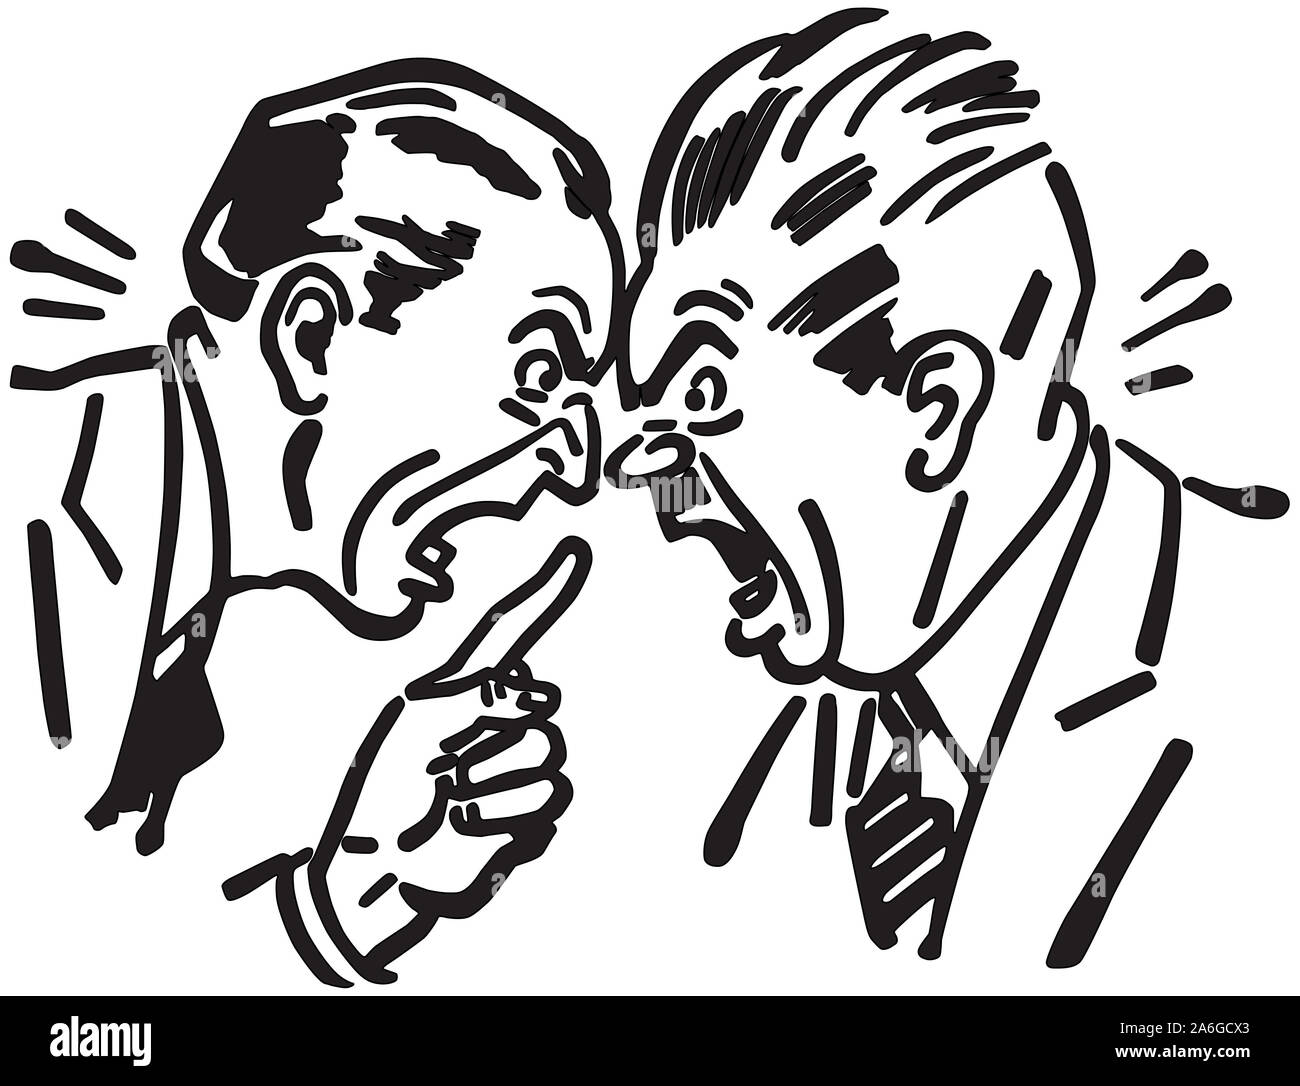 Heated Argument - Two men having an intense debate Stock Photo